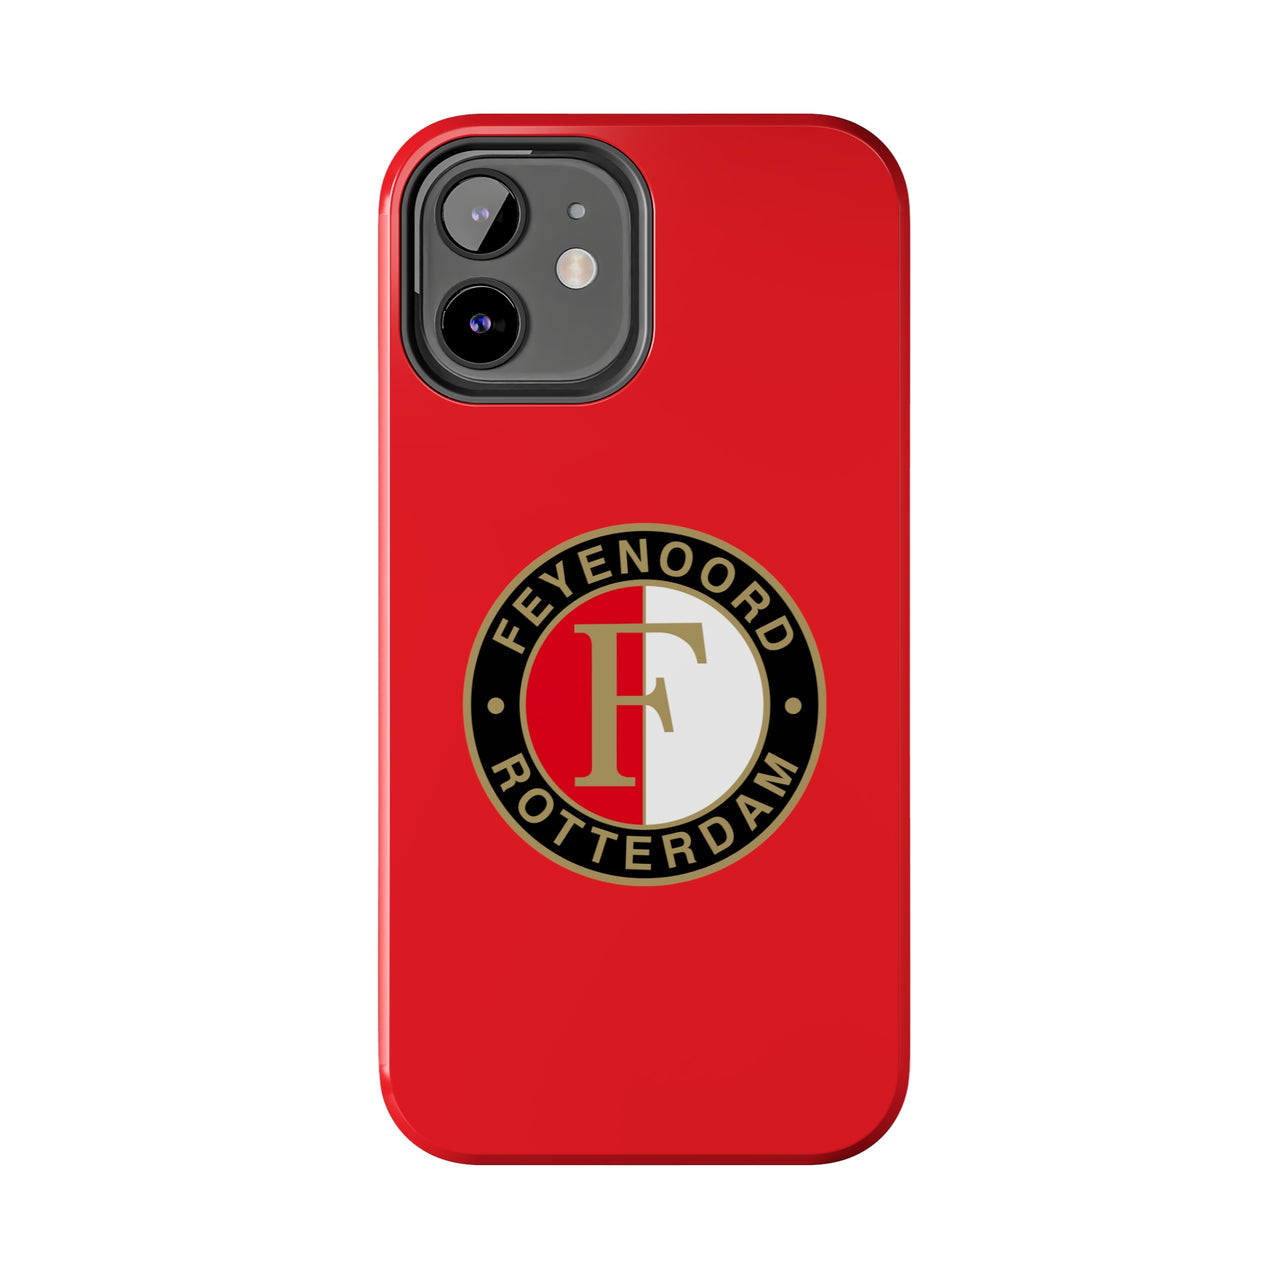 Feyenoord Tough Phone Cases